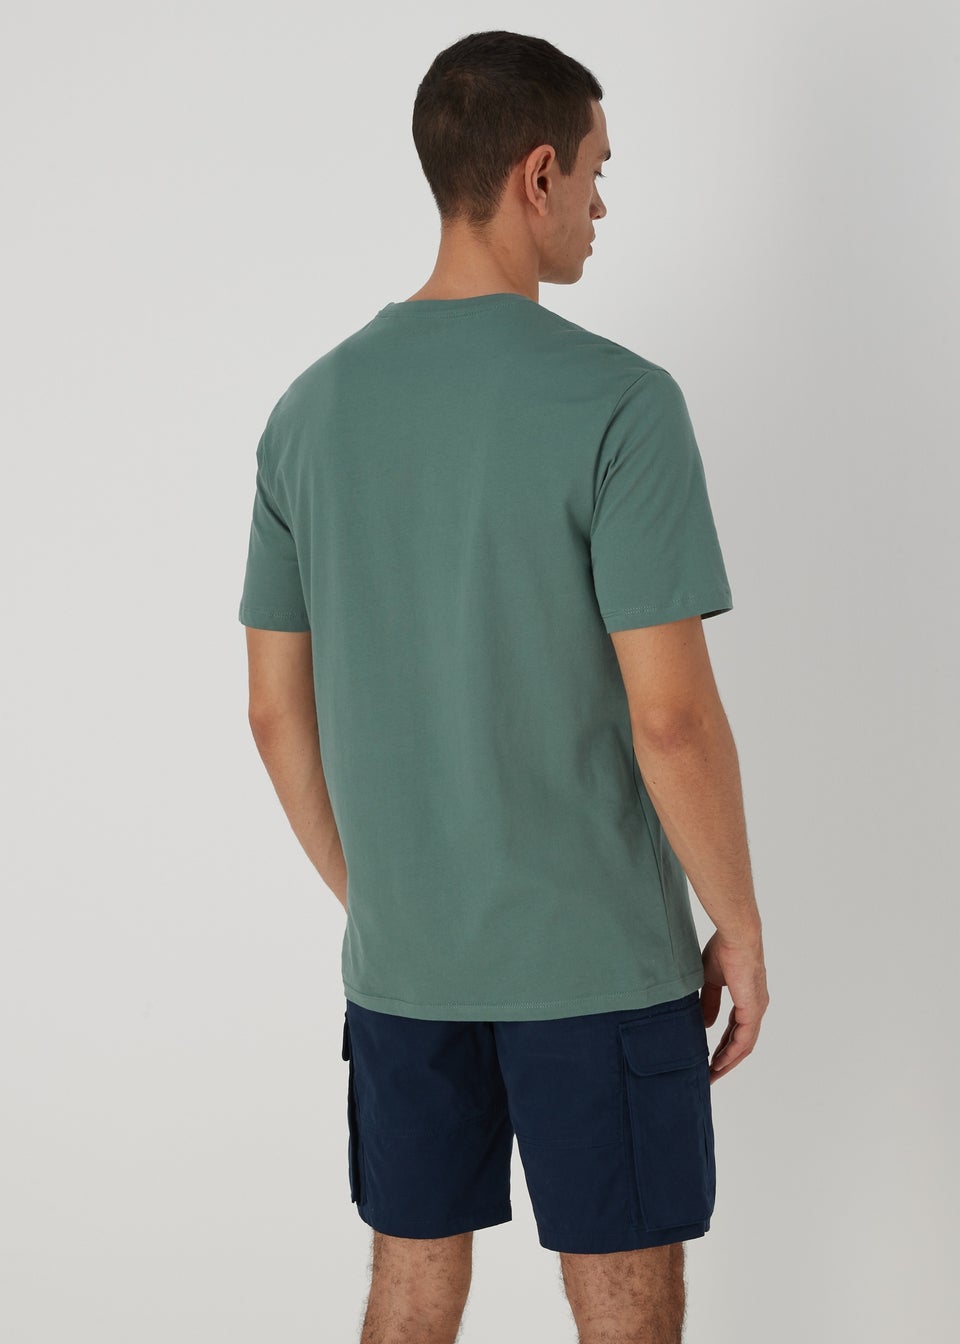 Pine Crew Neck T-Shirt